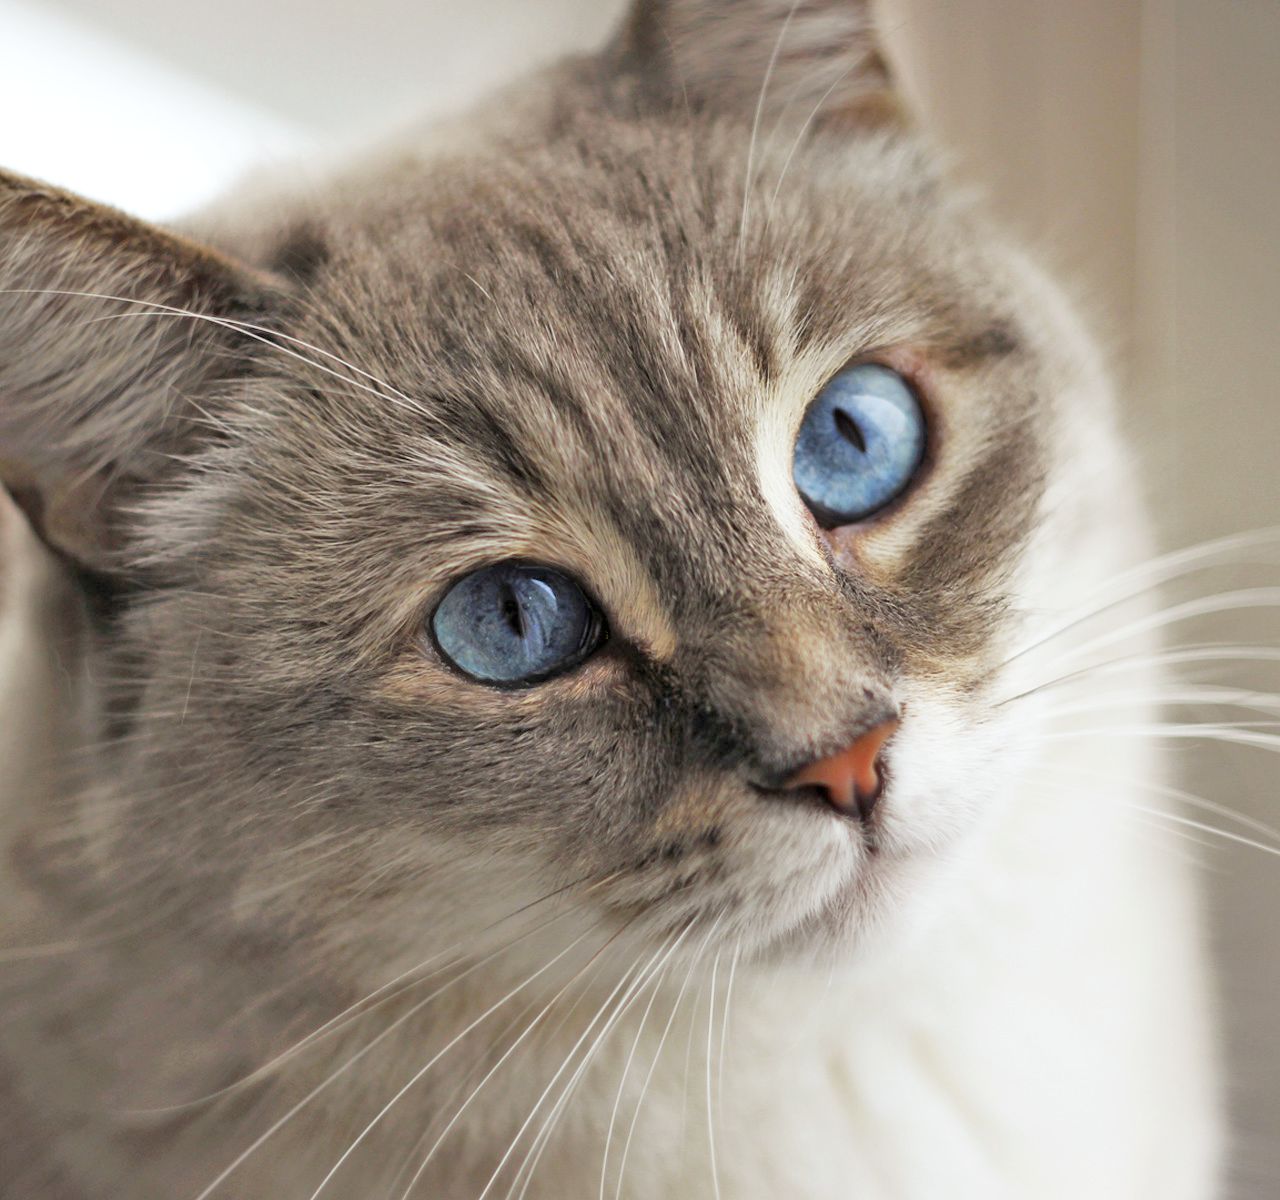 Cat &amp; Kitten Care Articles | PetSmart